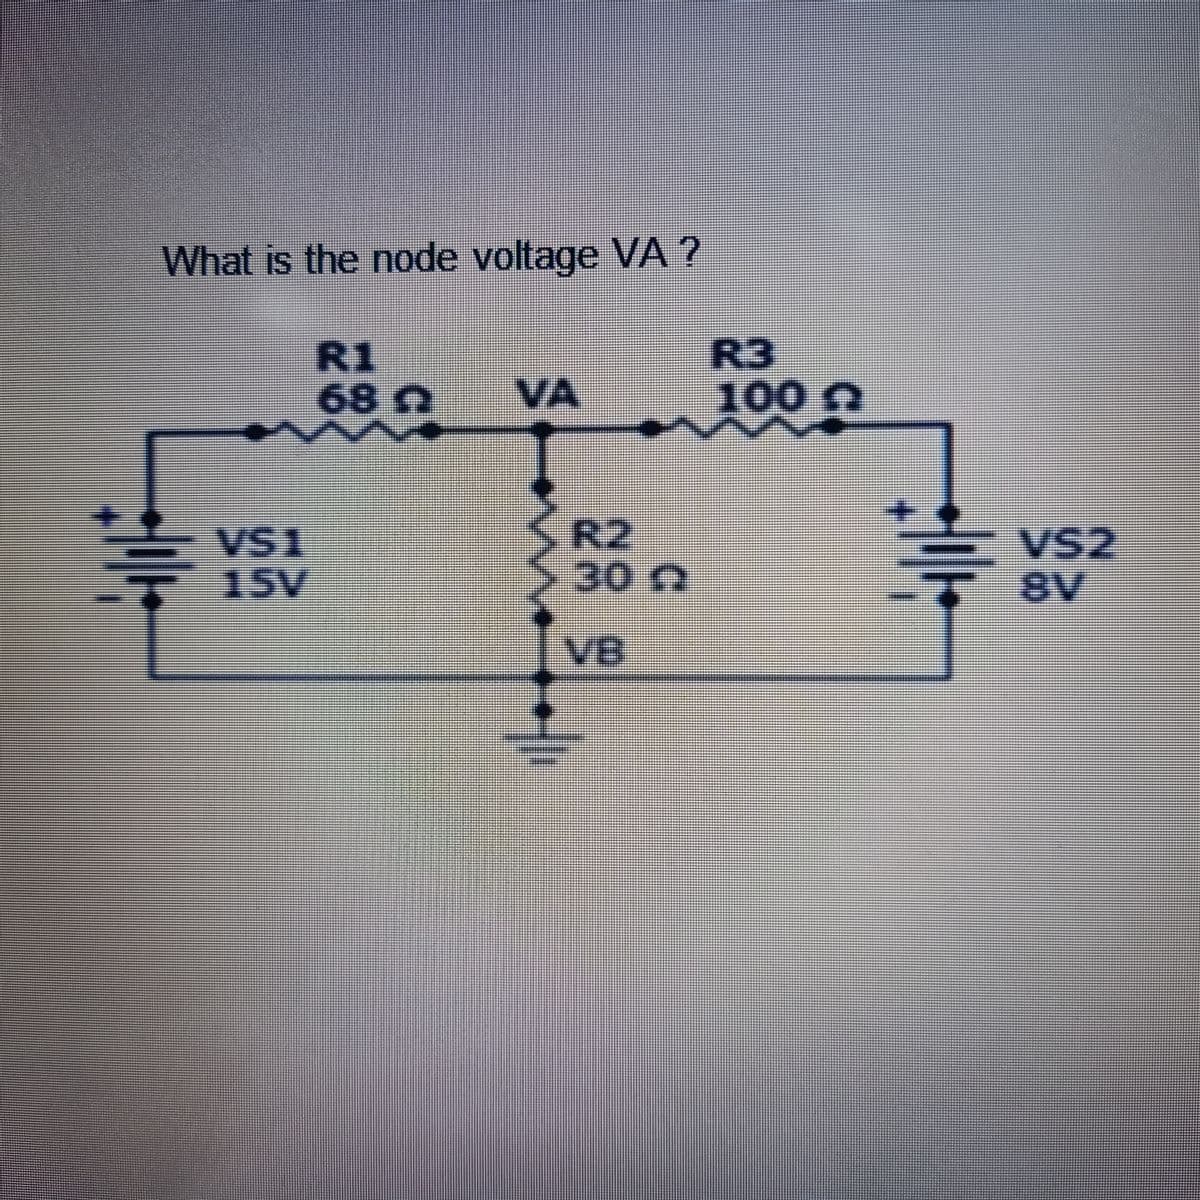 What is the node voltage VA?
1323
VS1
15V
R1
68 n
G
✔
30 n
VB
R3
100 €
놓
ZSA
BV